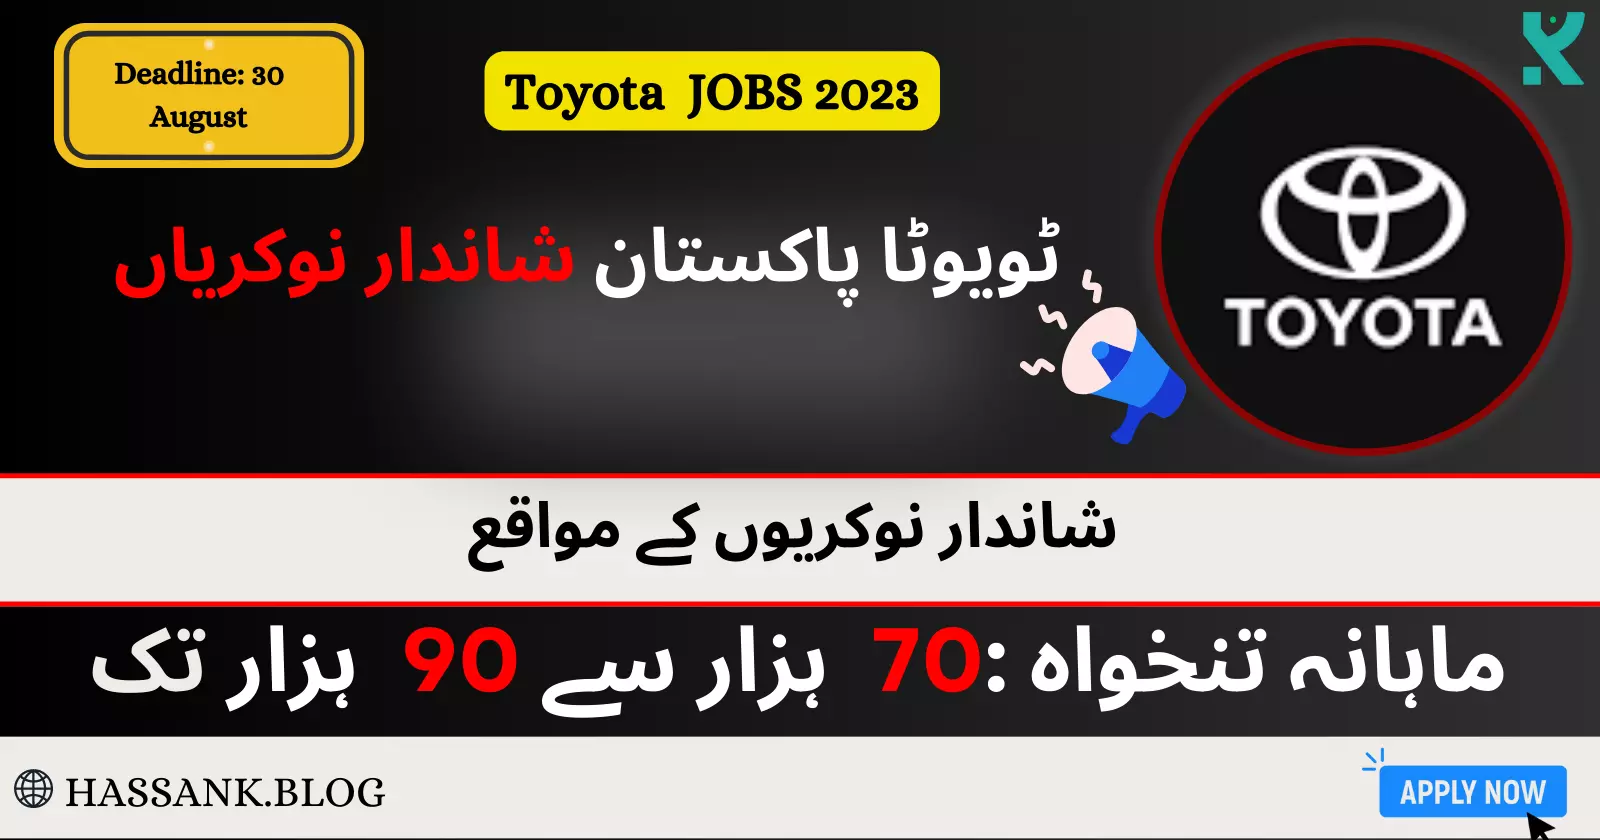 Apply online for Toyota Pakistan Jobs